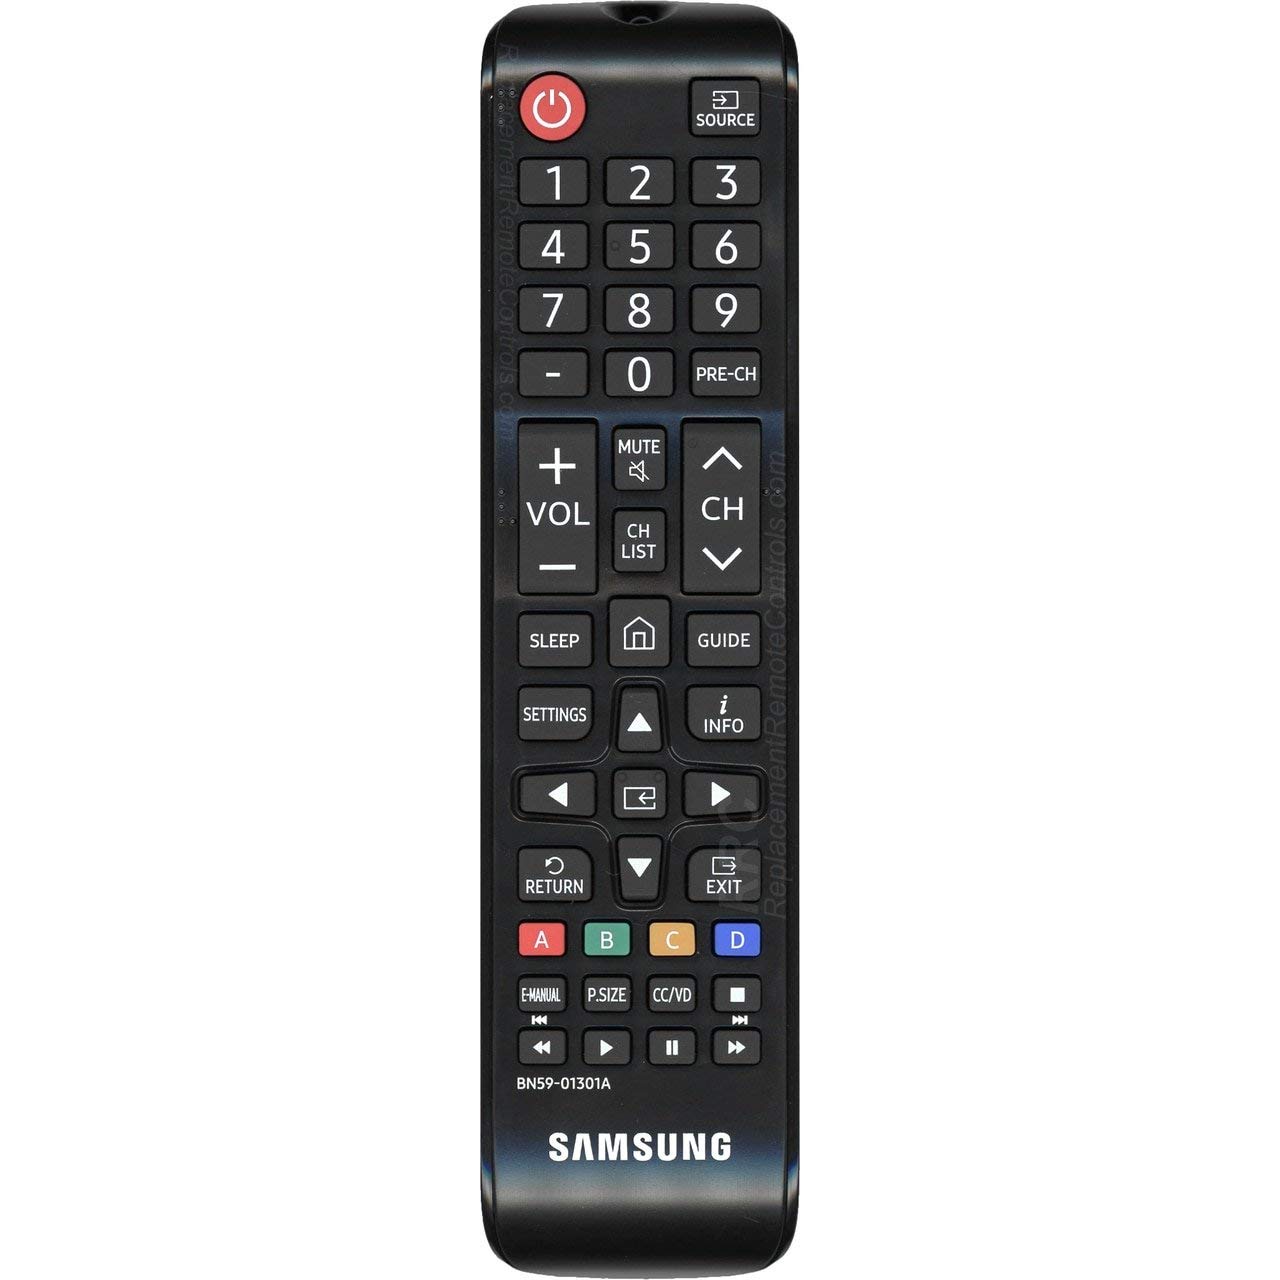 Samsung BN59-01301A TV Remote Control for N5300 NU6900 NU7100 NU7300 2018 Models (Renewed)